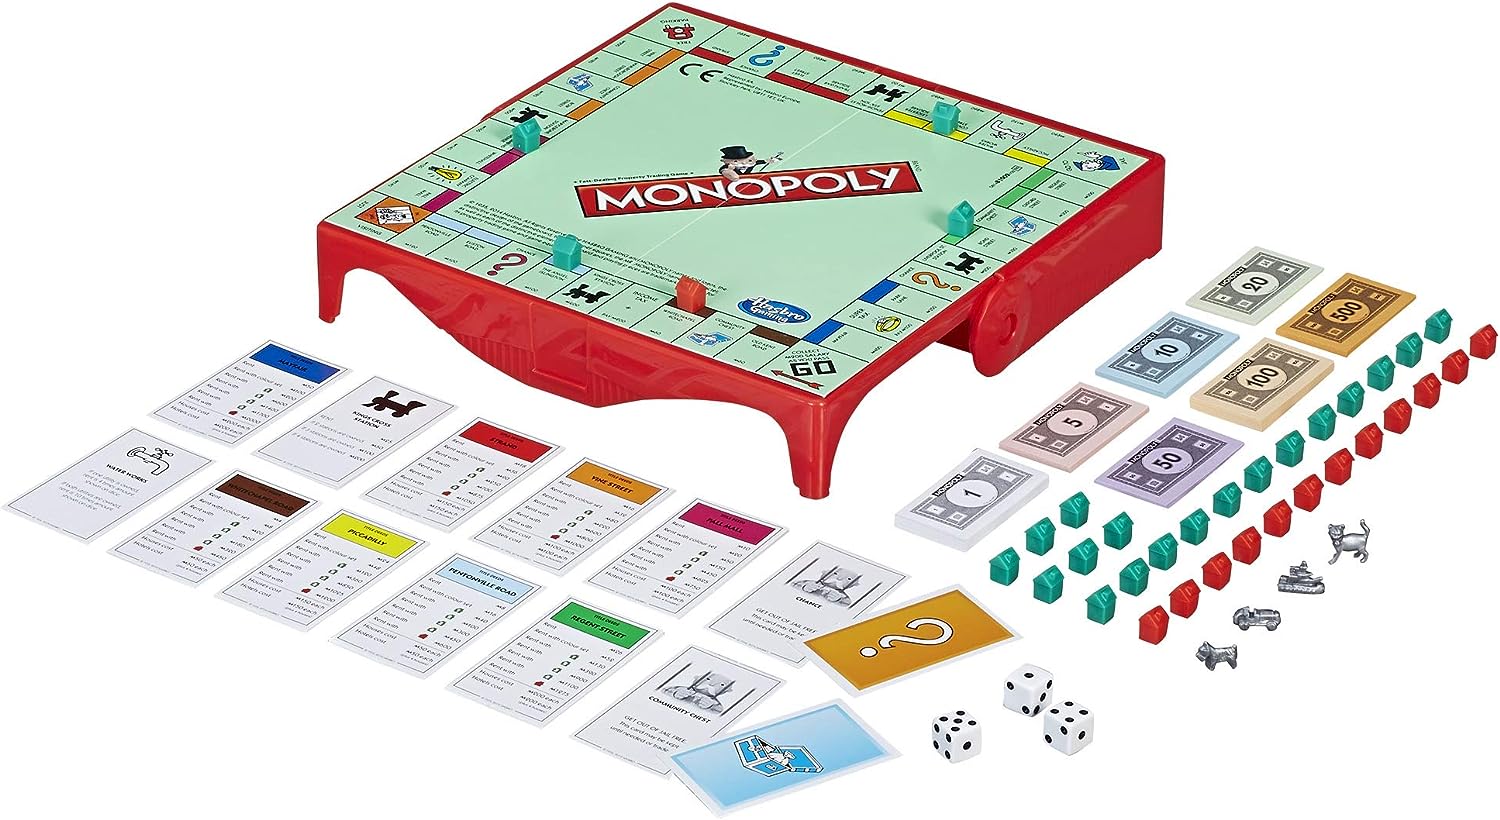 Hasbro Gaming Monopoly Grab & Go Game